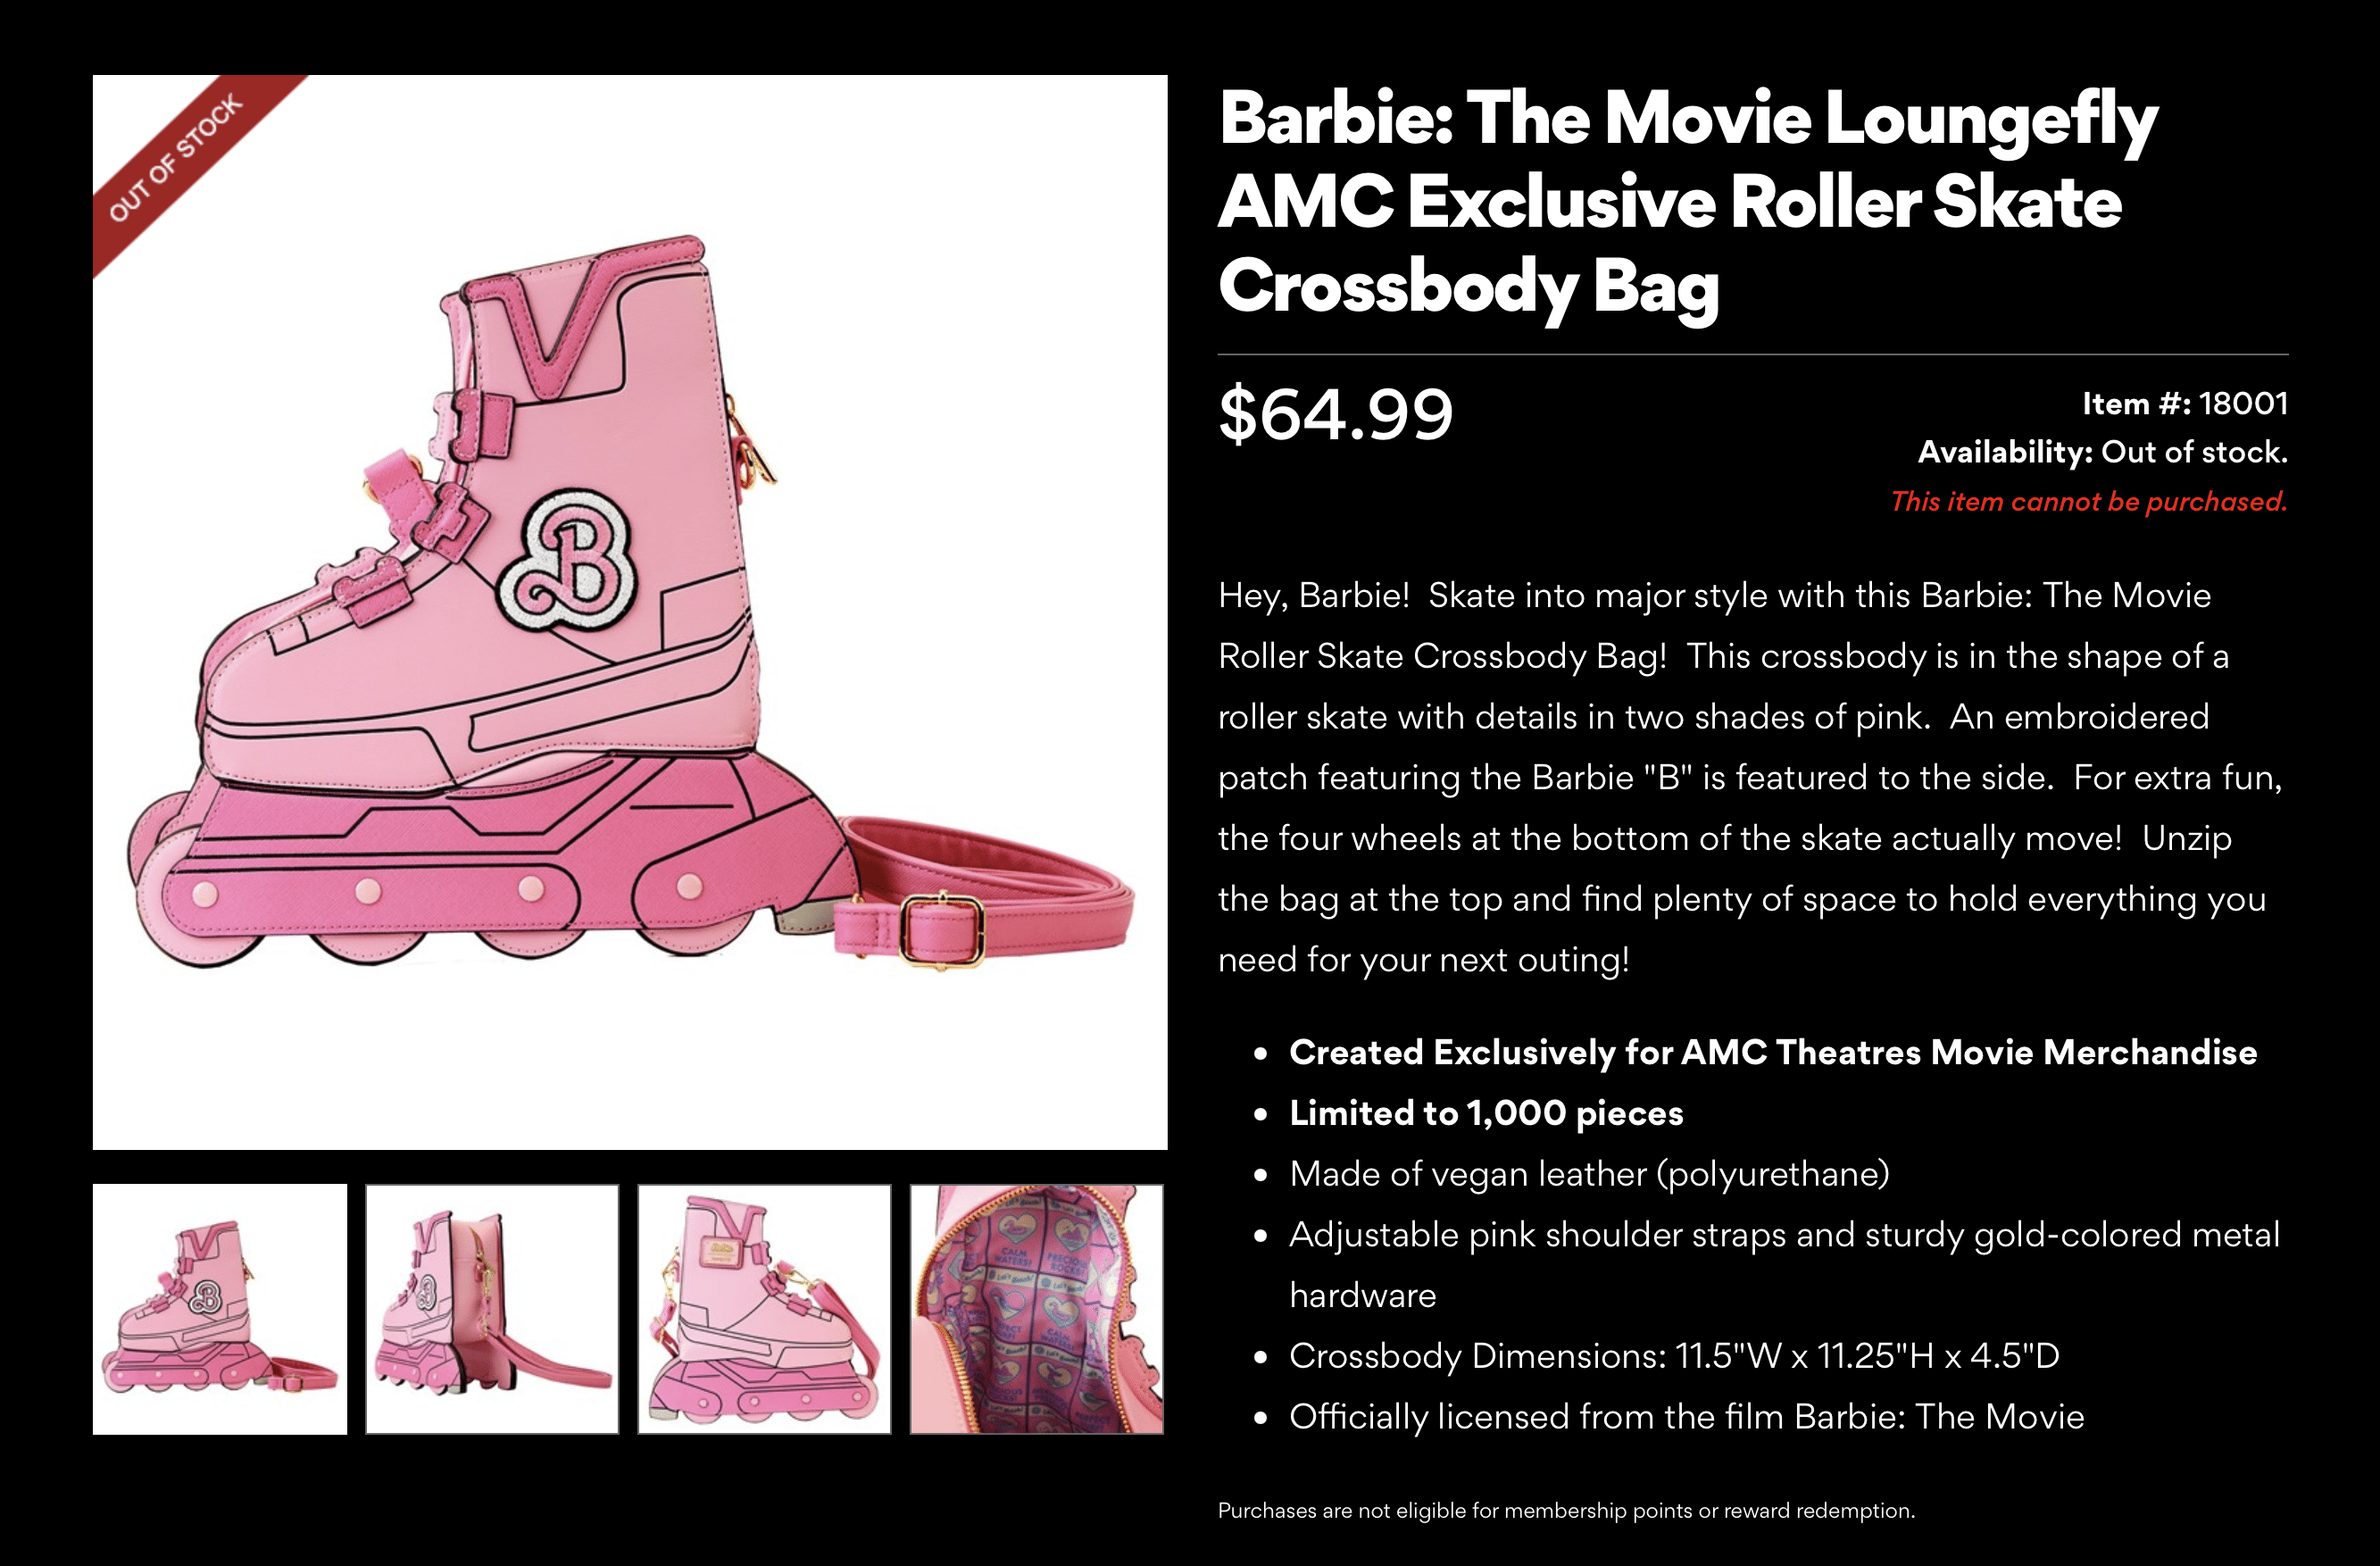 AMC Barbie Bag Sold Out